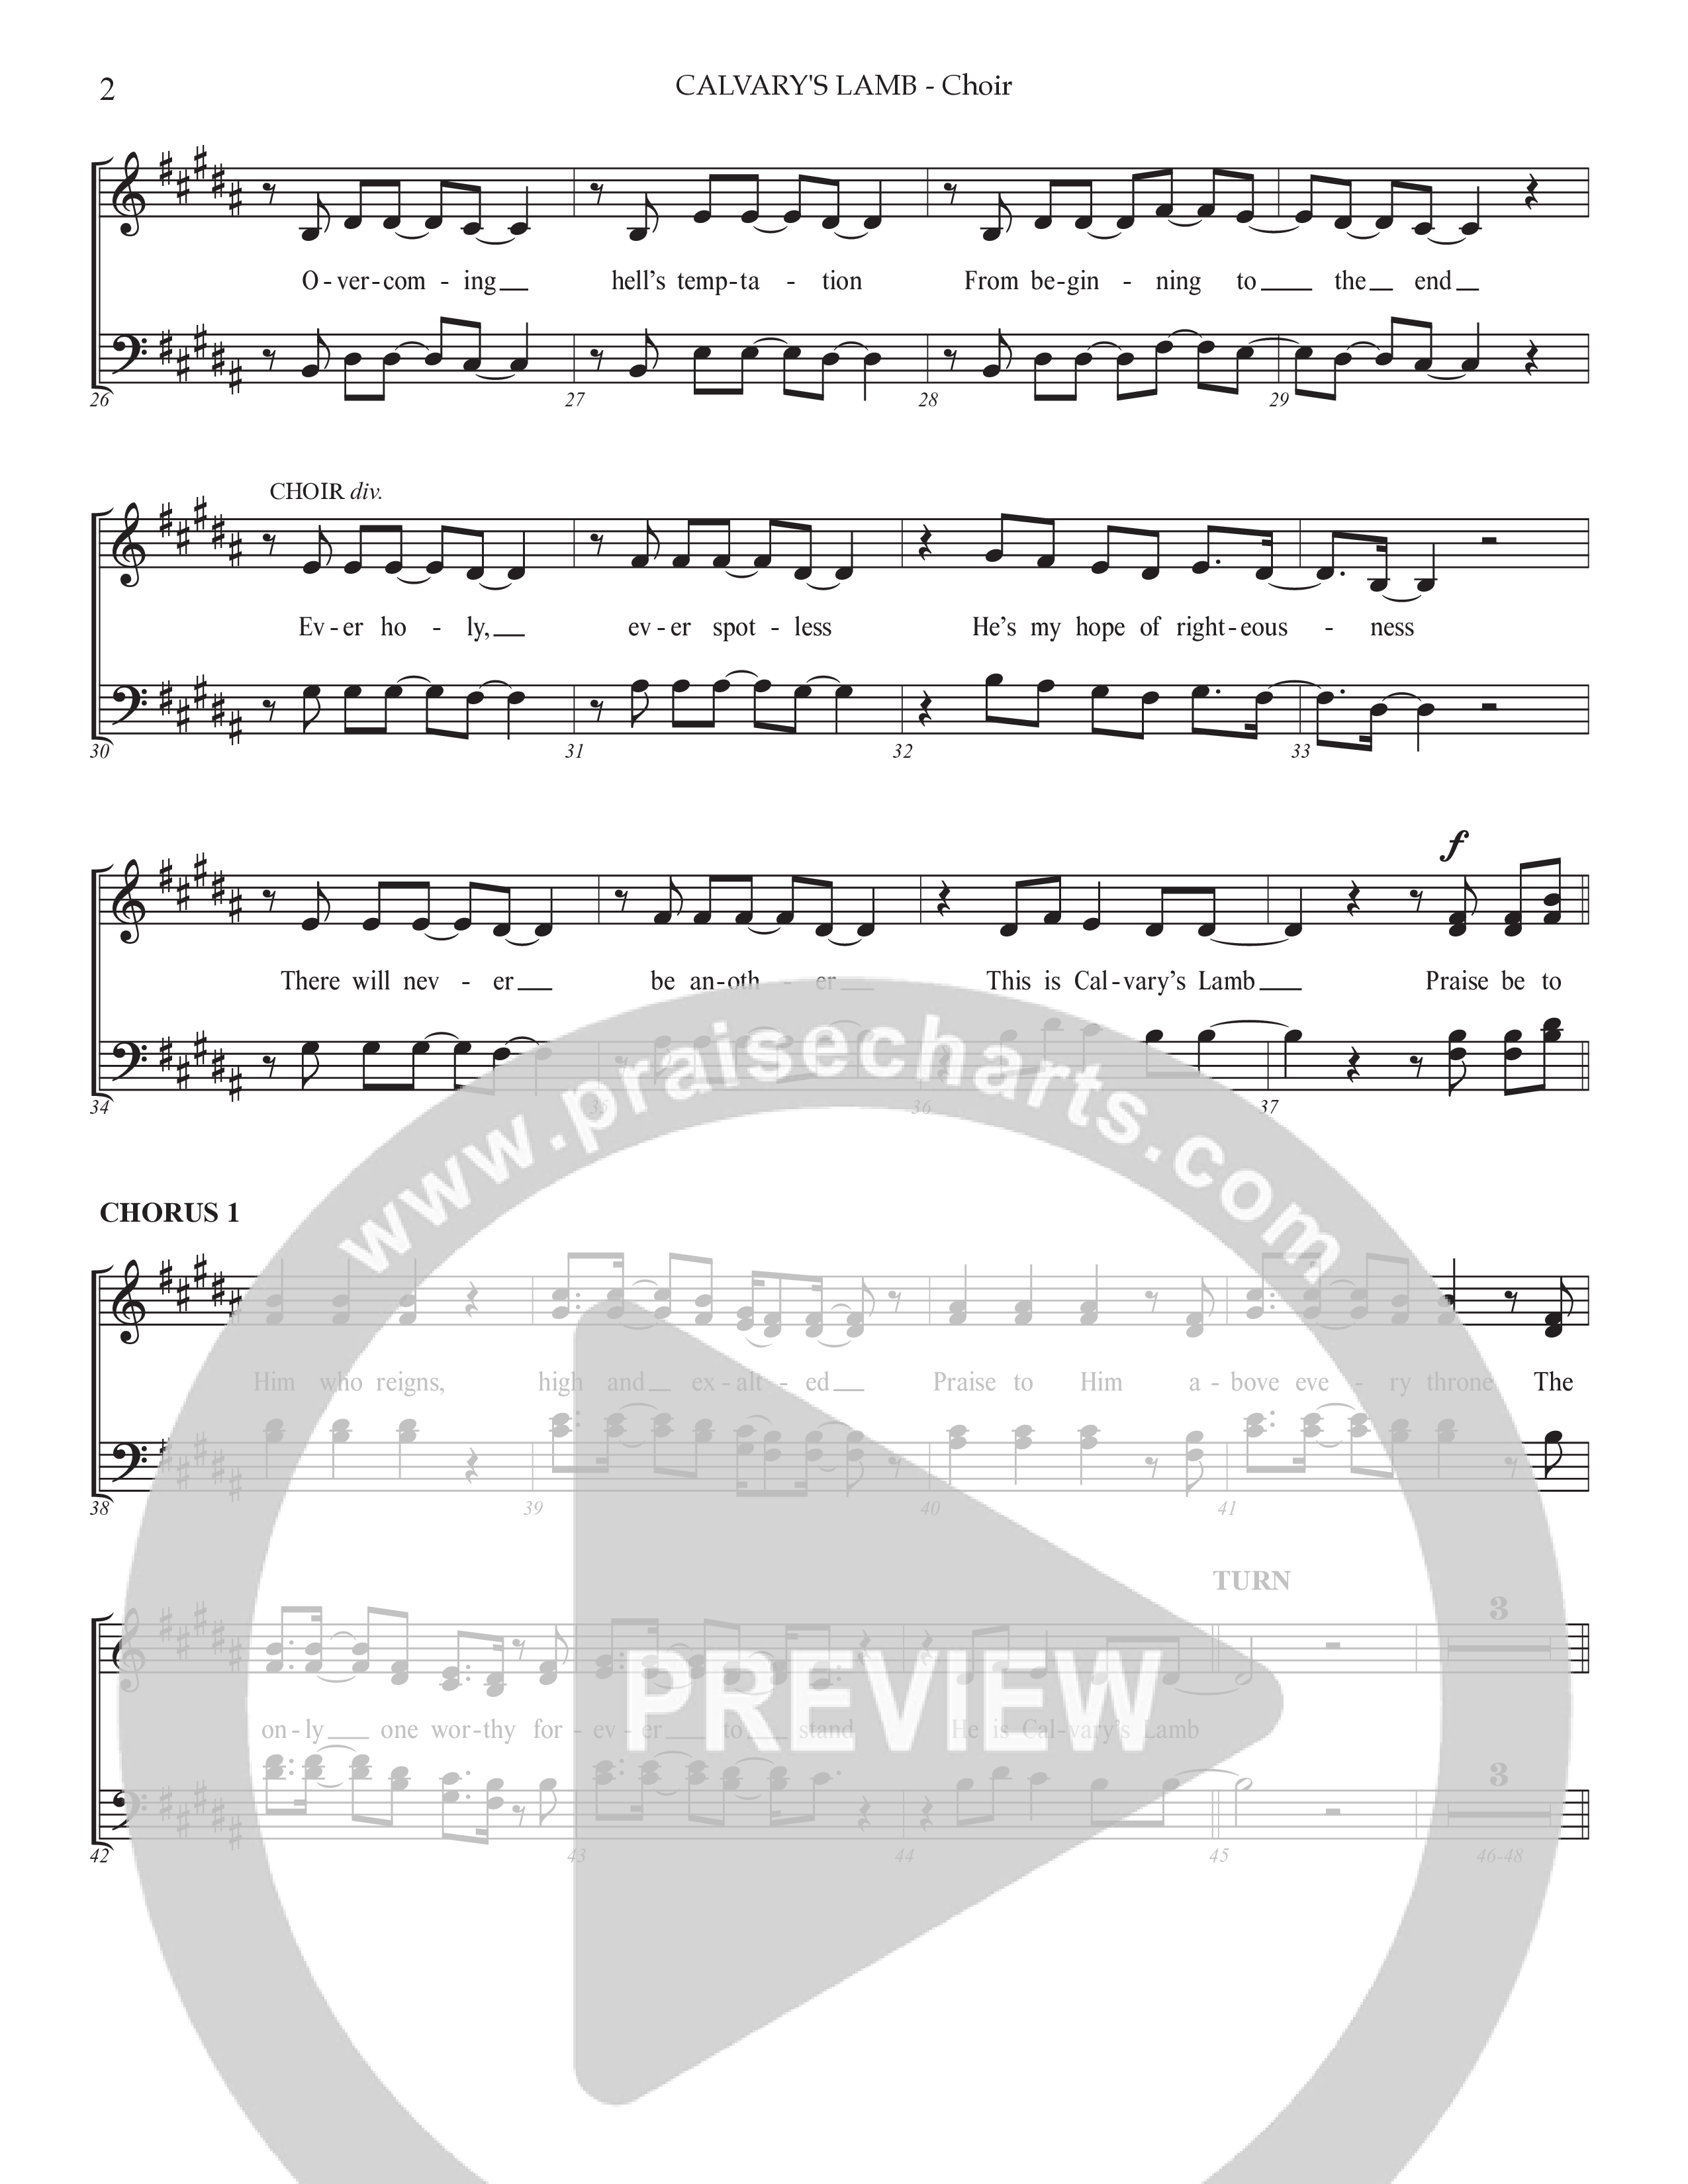 Calvary's Lamb Choir Sheet (Prestonwood Worship / Michael Neale / Arr. Dylan McNab / Orch. Johann Acuna)